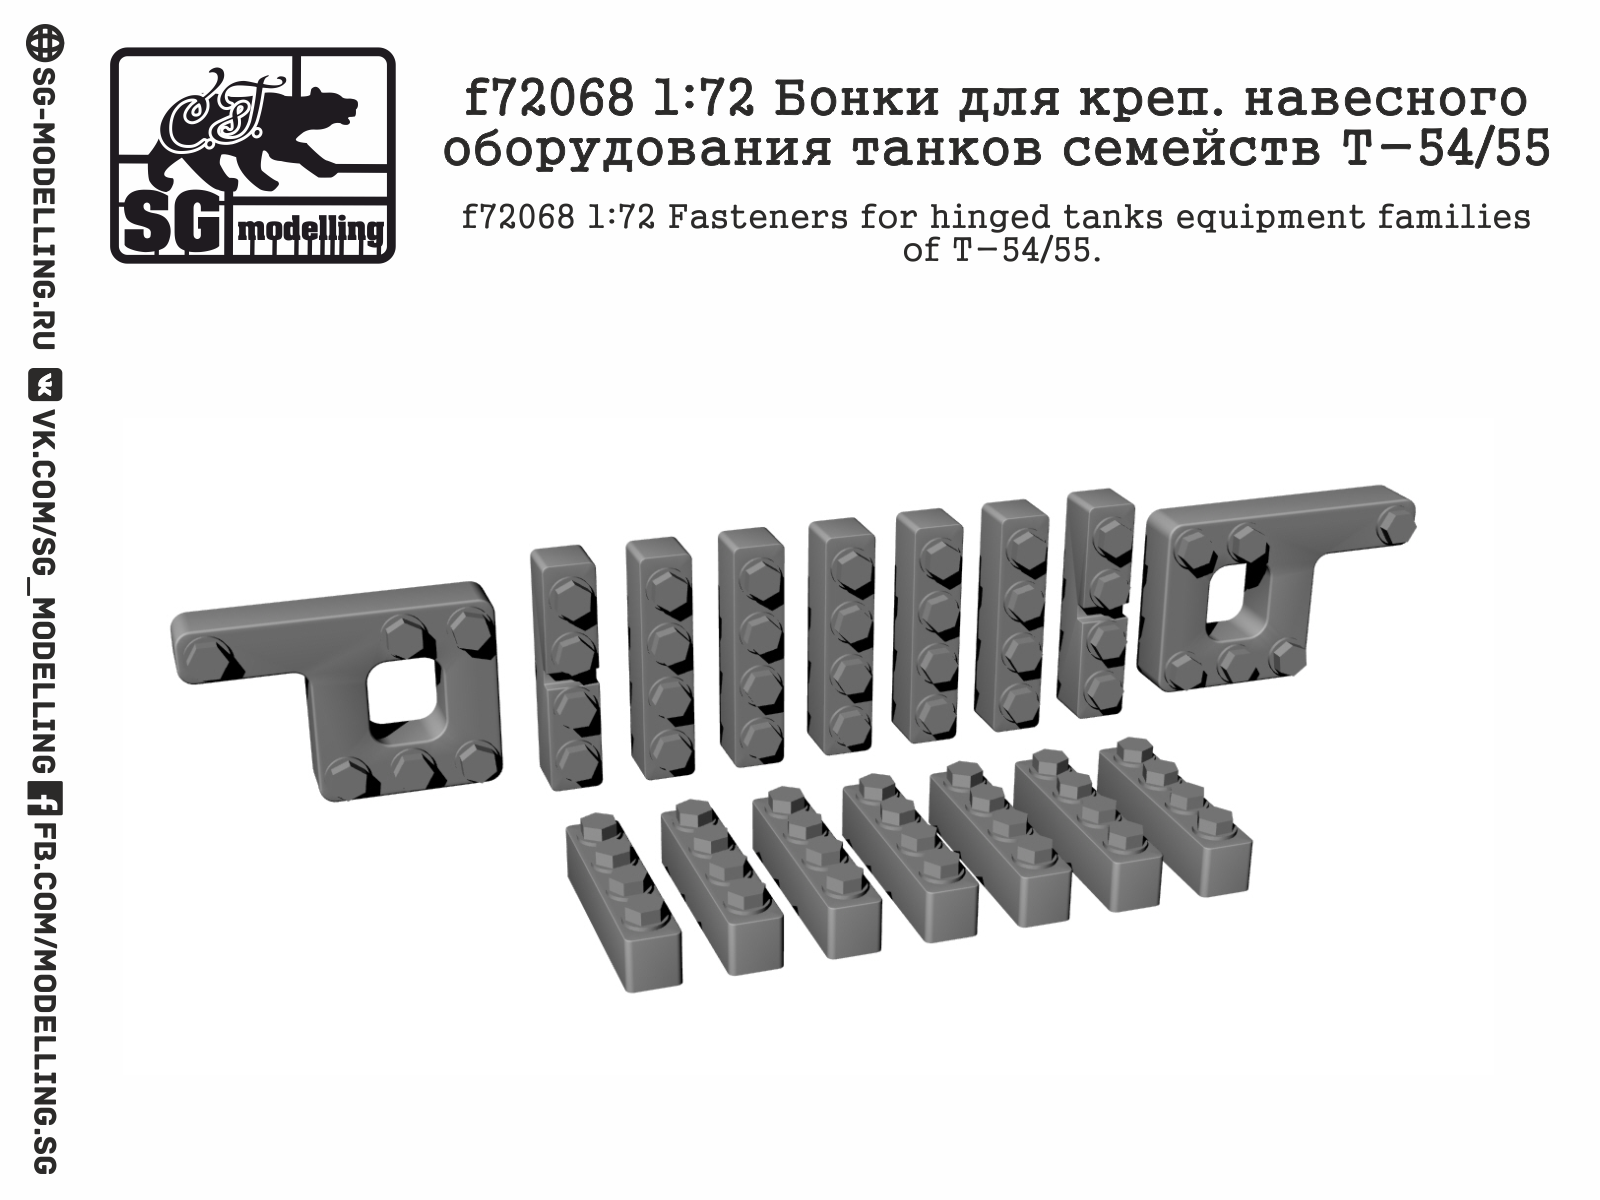 T-54/55 fasteners